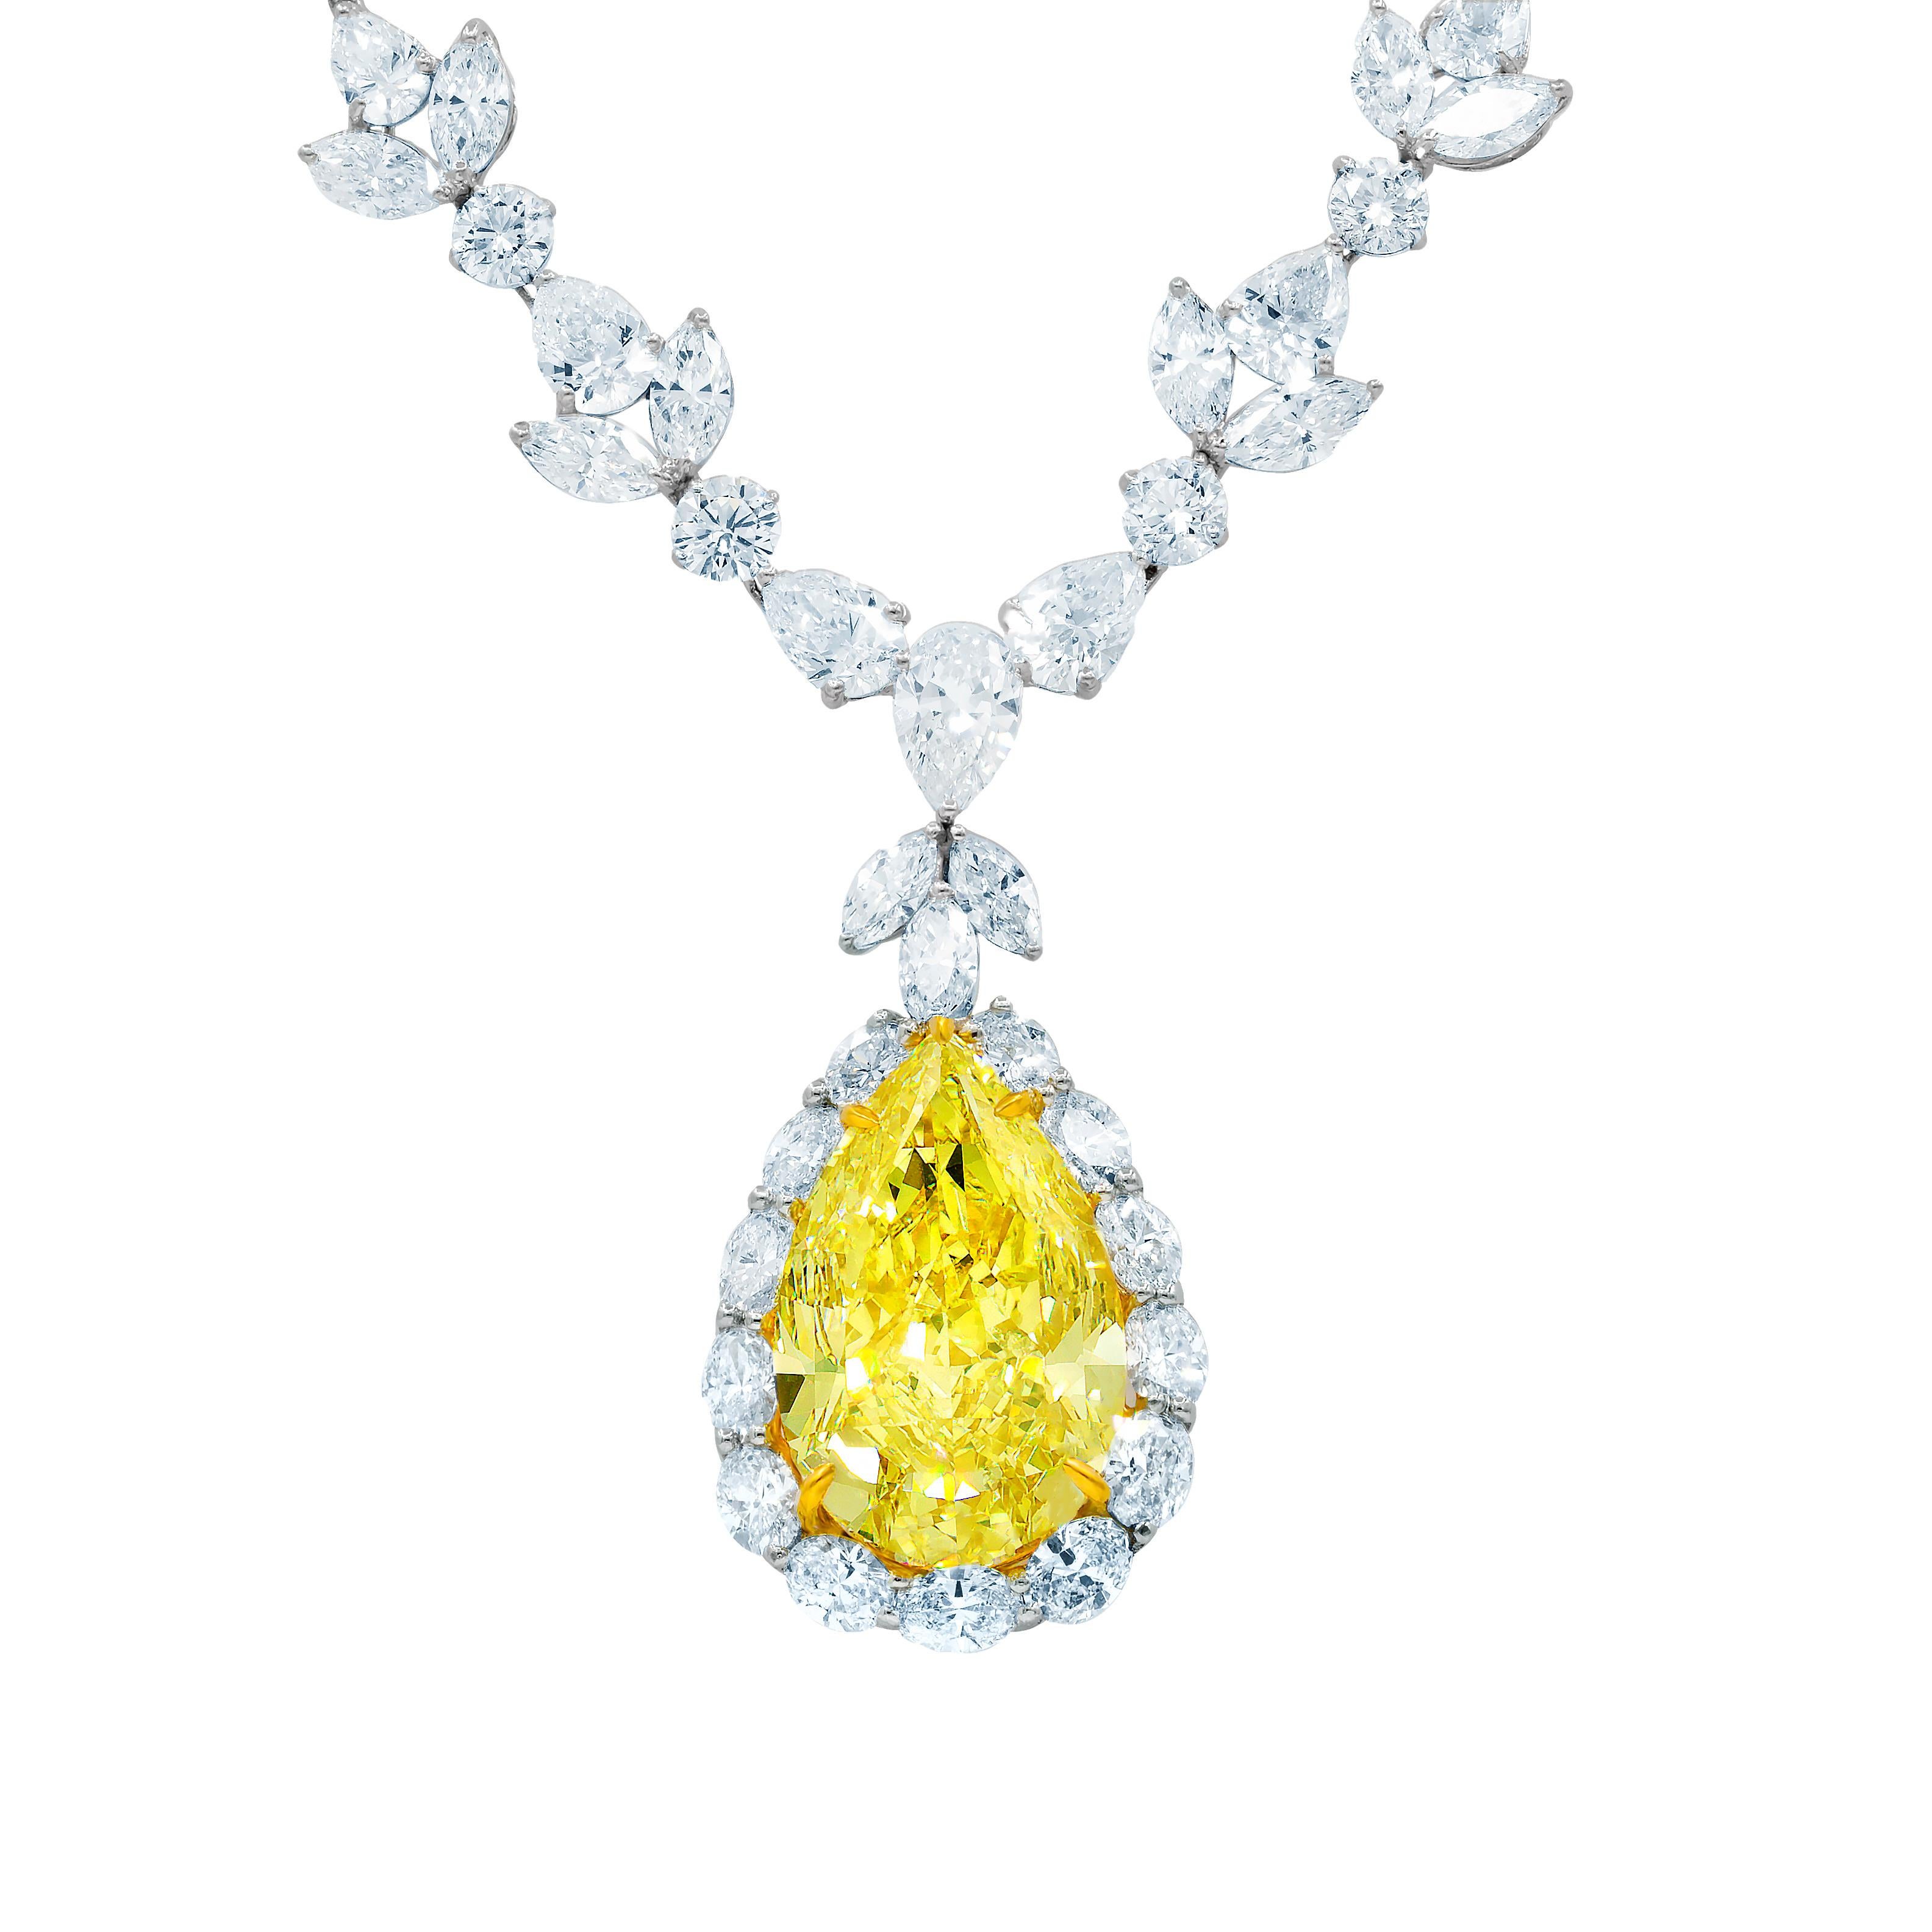 Platinum diamond necklace with GIA certified center 35.31 fancy intense vivd yellow vs2 pear shape, GIA#2145952743 set in platinum handmade necklace, features 47.00ct of outside diamonds D/E/F VVS-VS quality. Plus  center 1.50ct pear e vs1